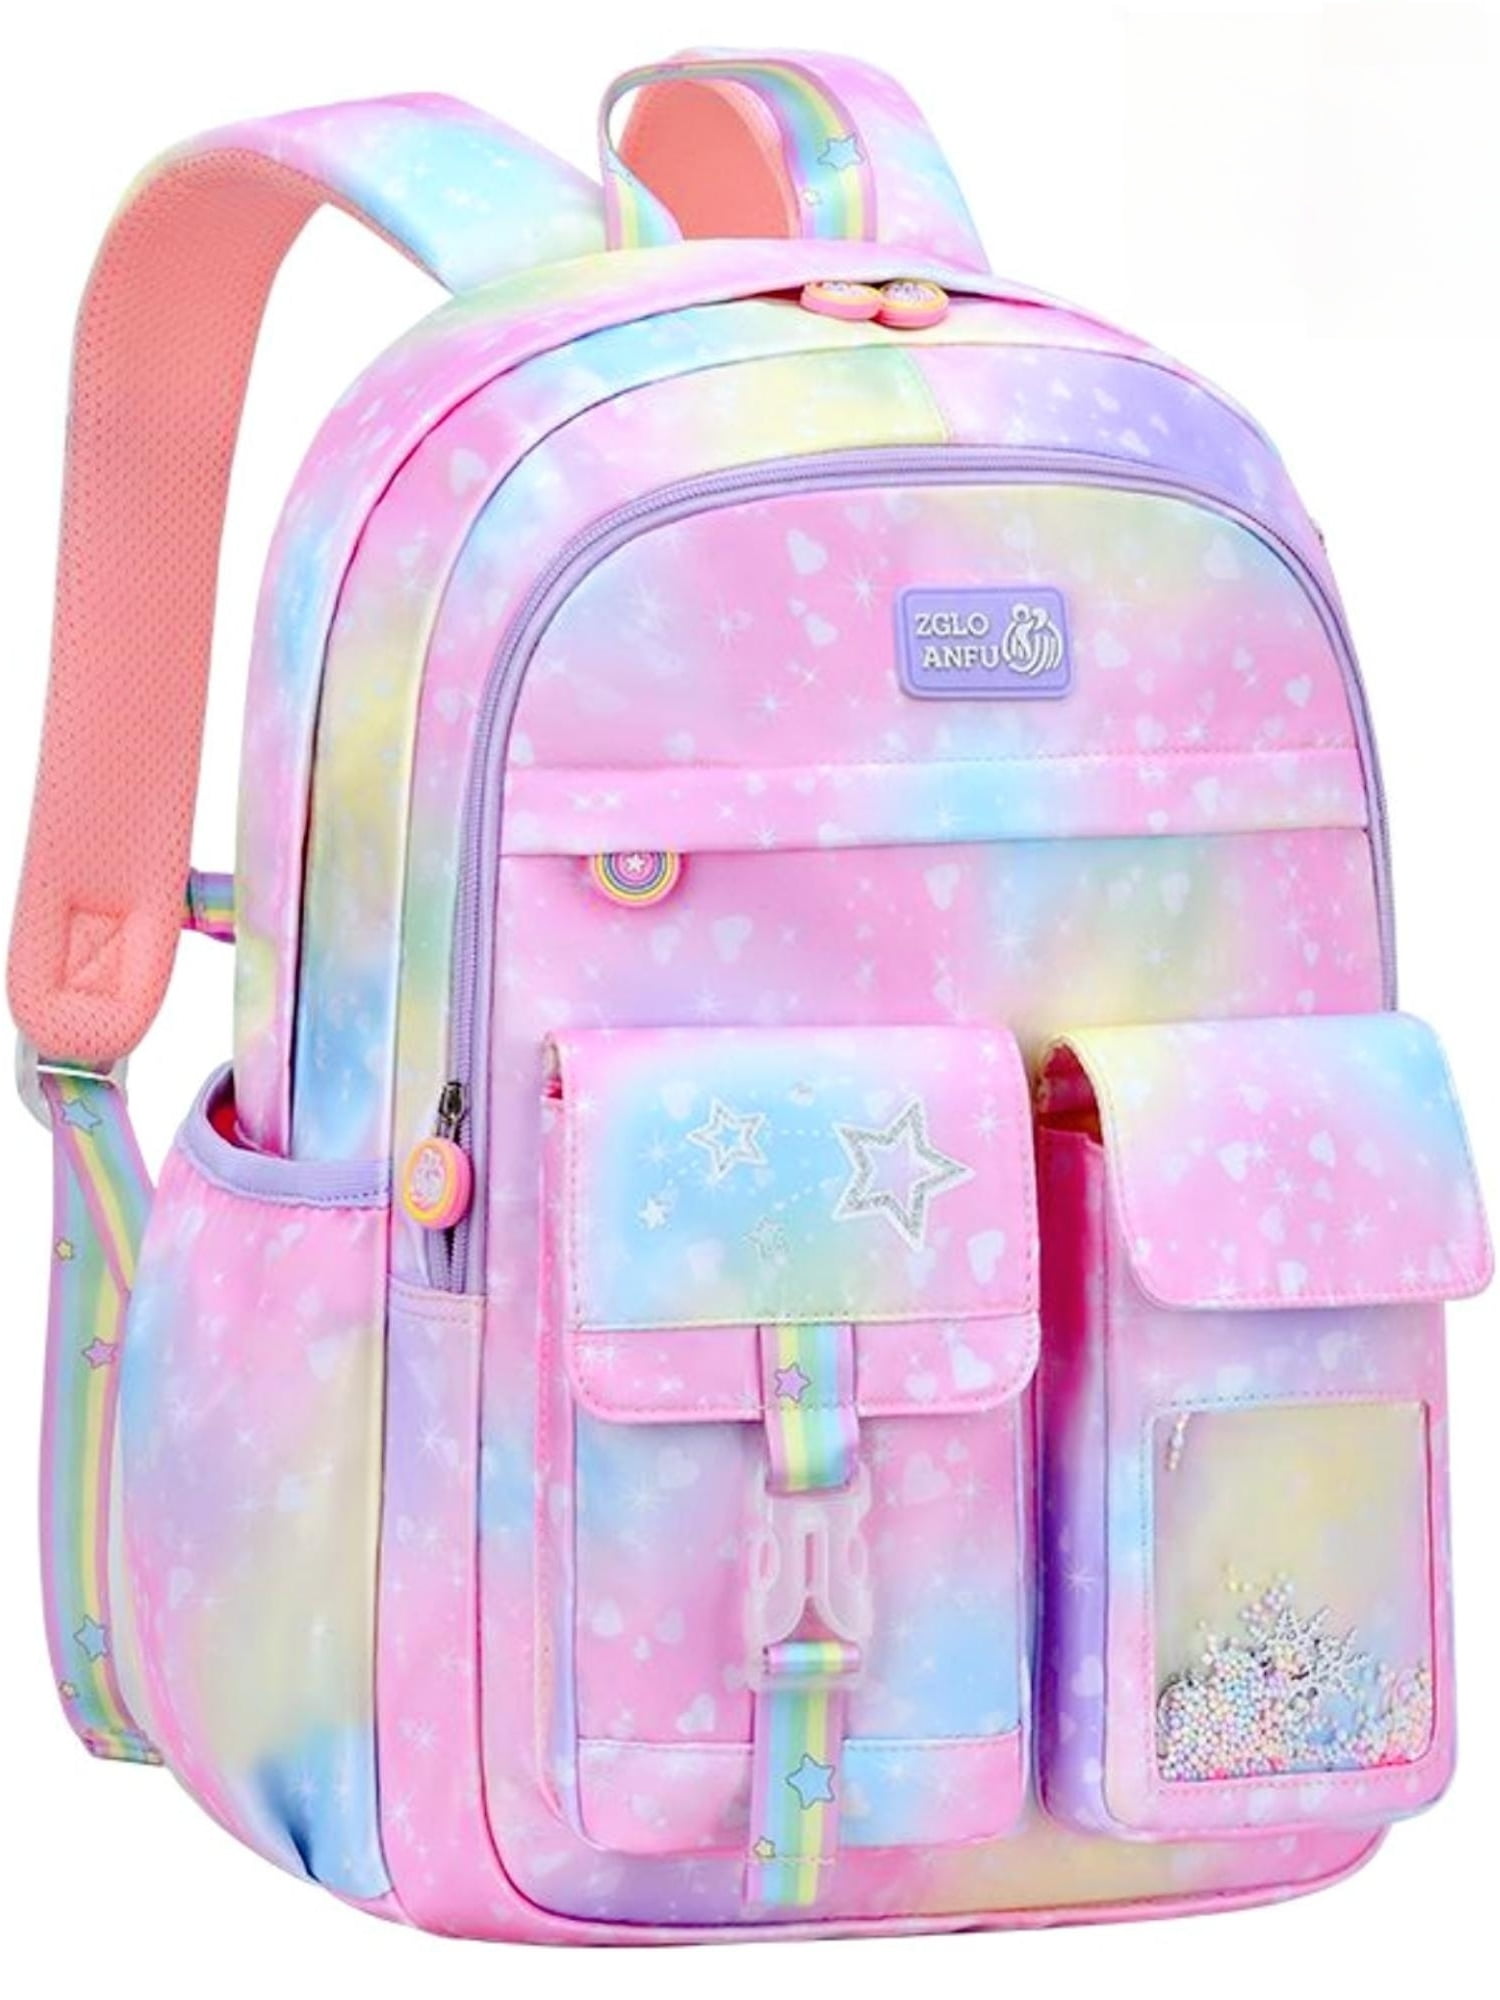 School Bags for Girls, Lightweight School Backpacks for Middle School ...